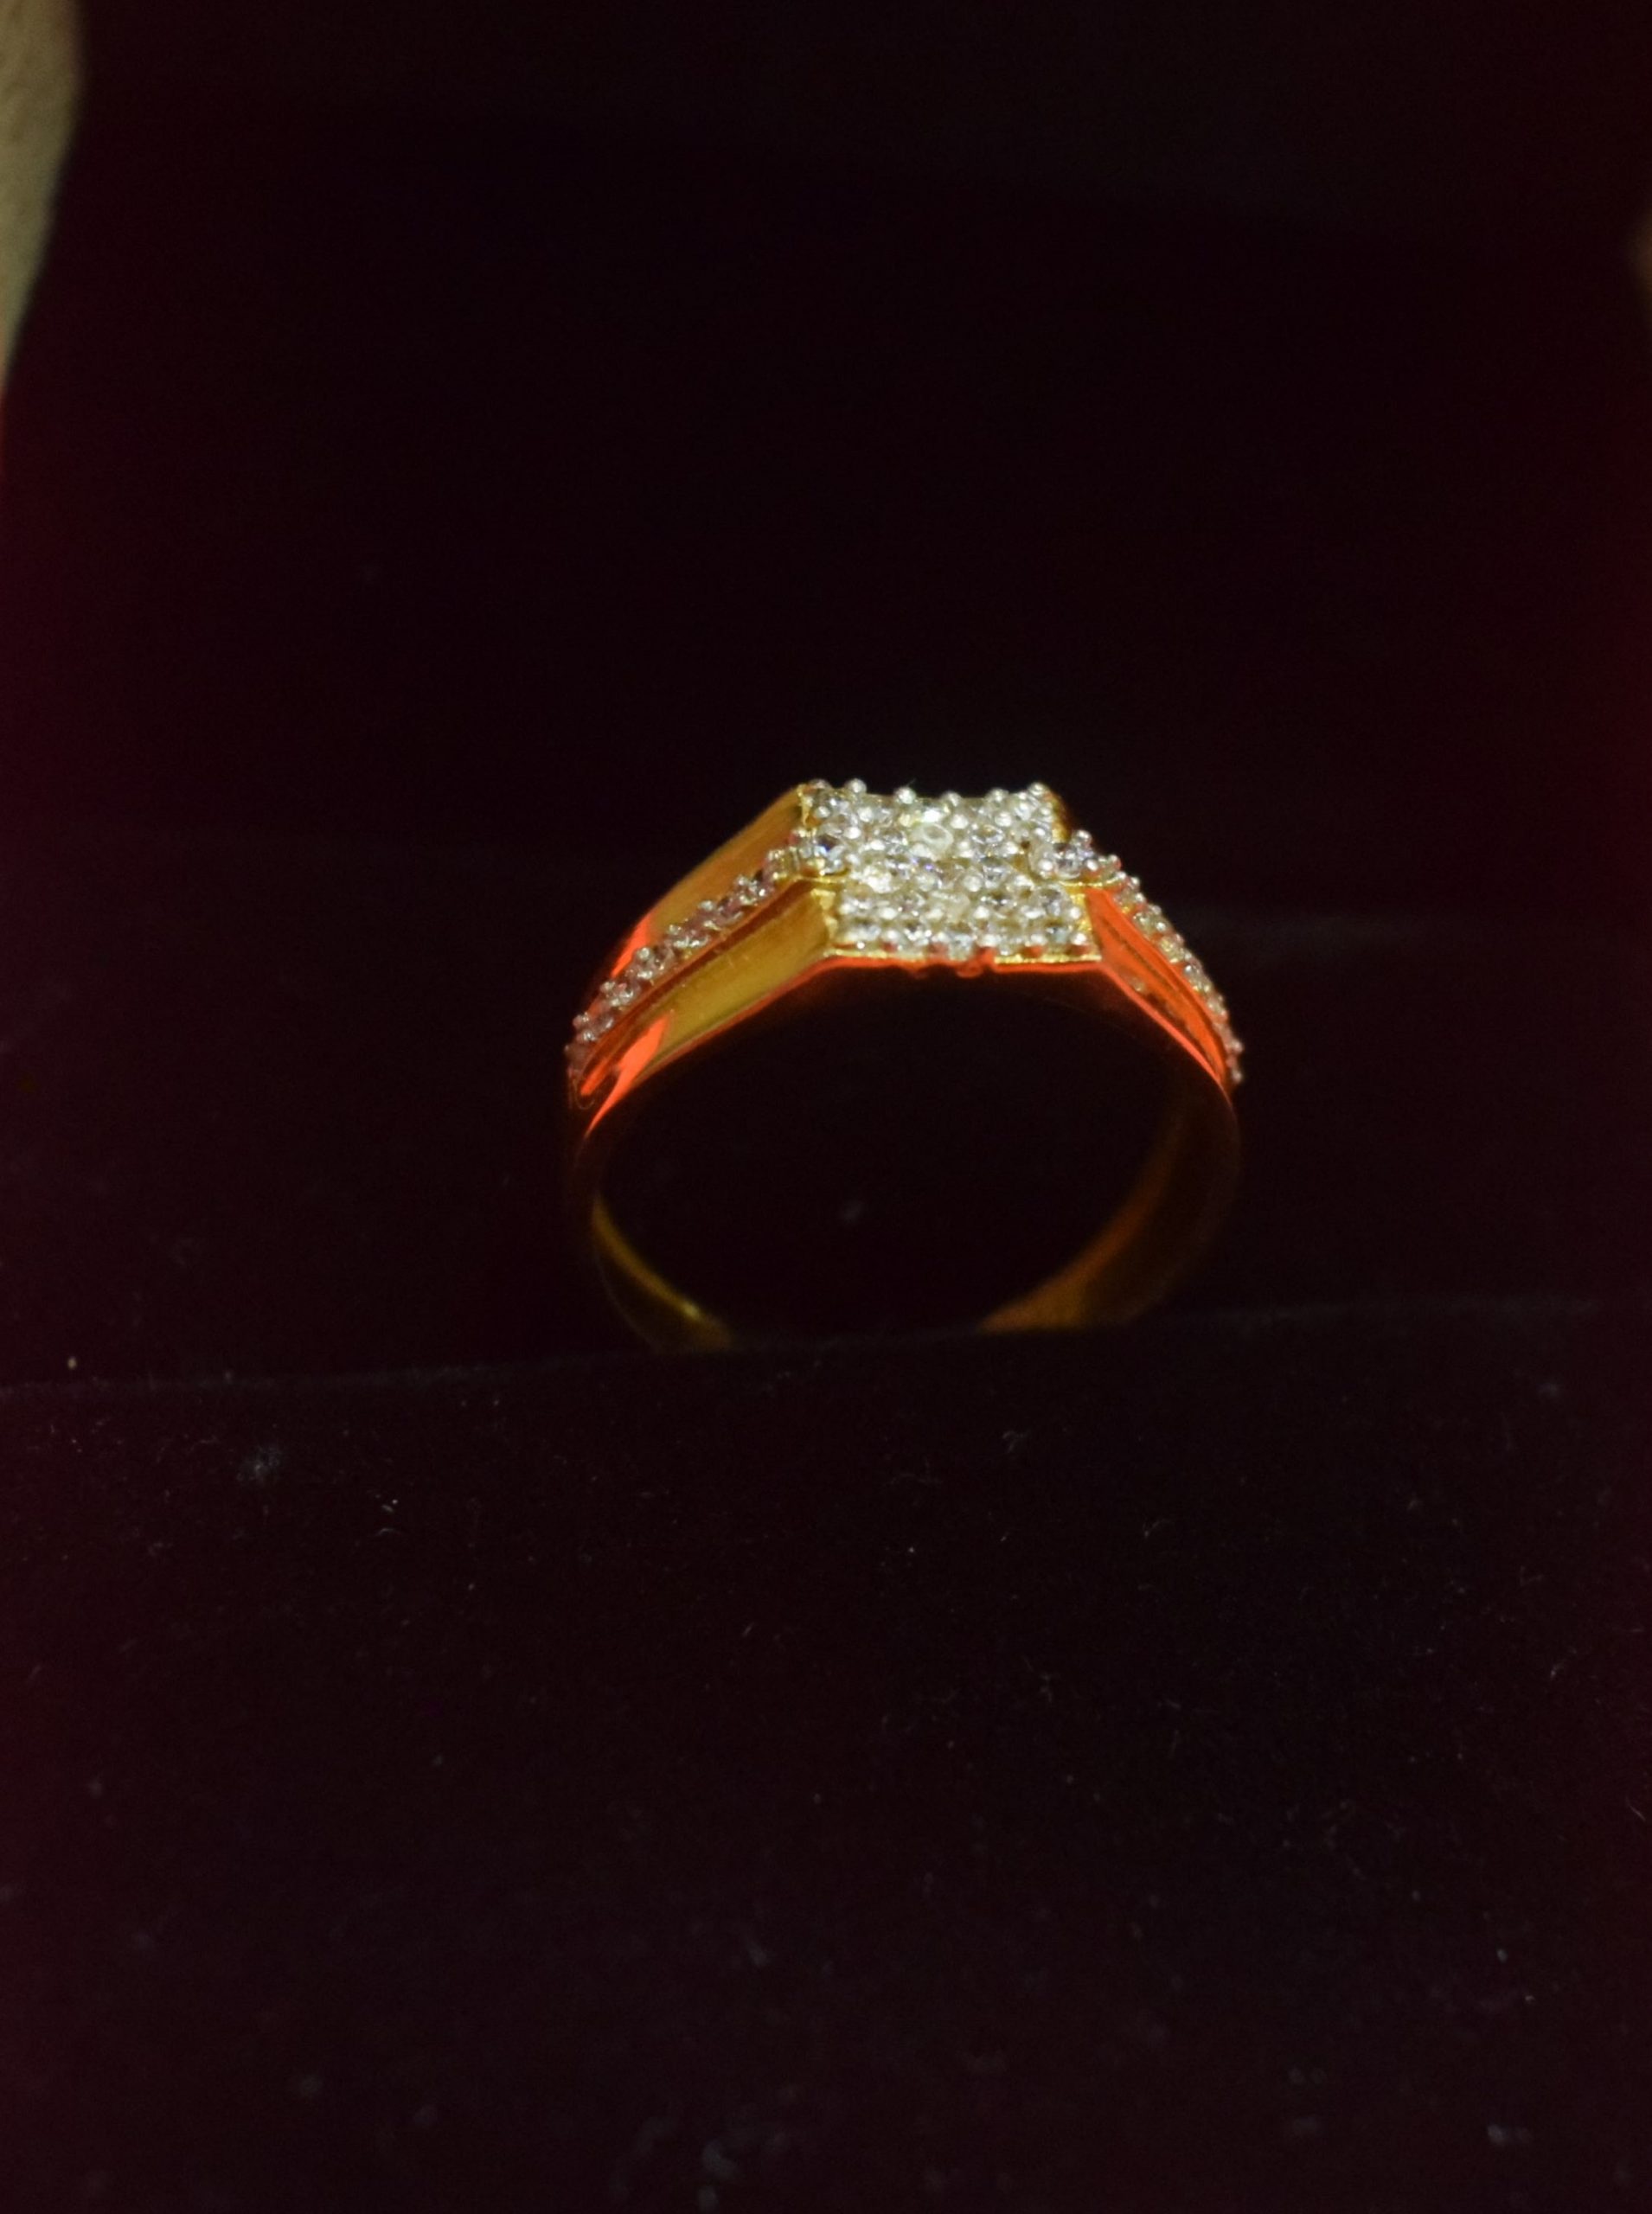 Premium Photo | Wedding golden metal rings pair of jewelery gold rings  marriage celebration